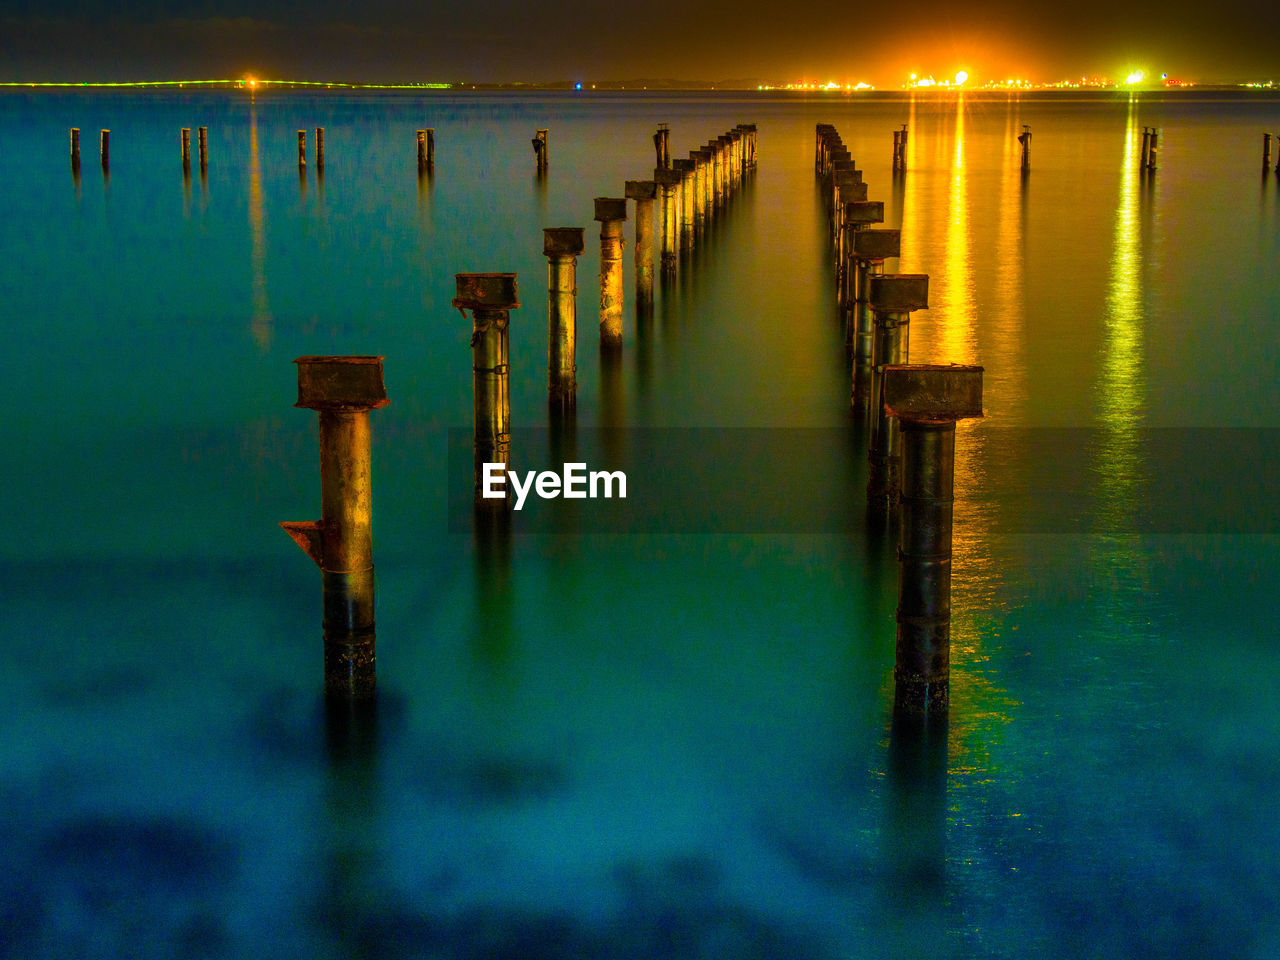 Wooden posts in ocean at night